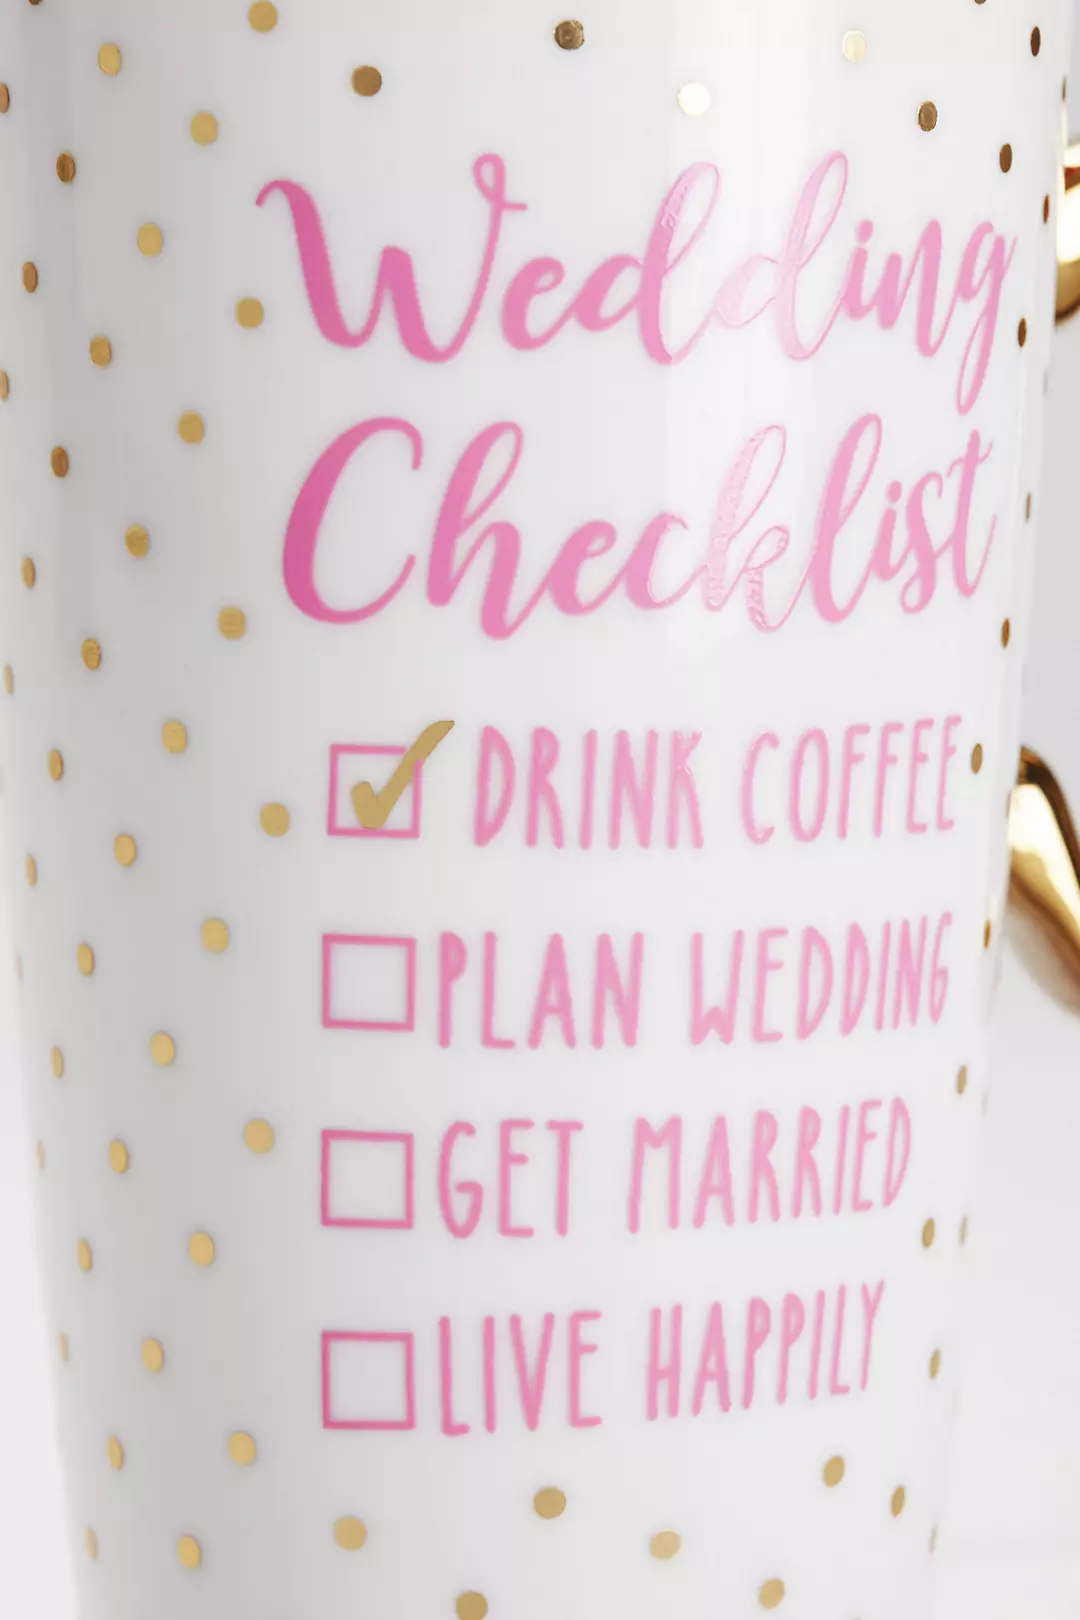 Wedding Checklist Coffee Mug Image 3